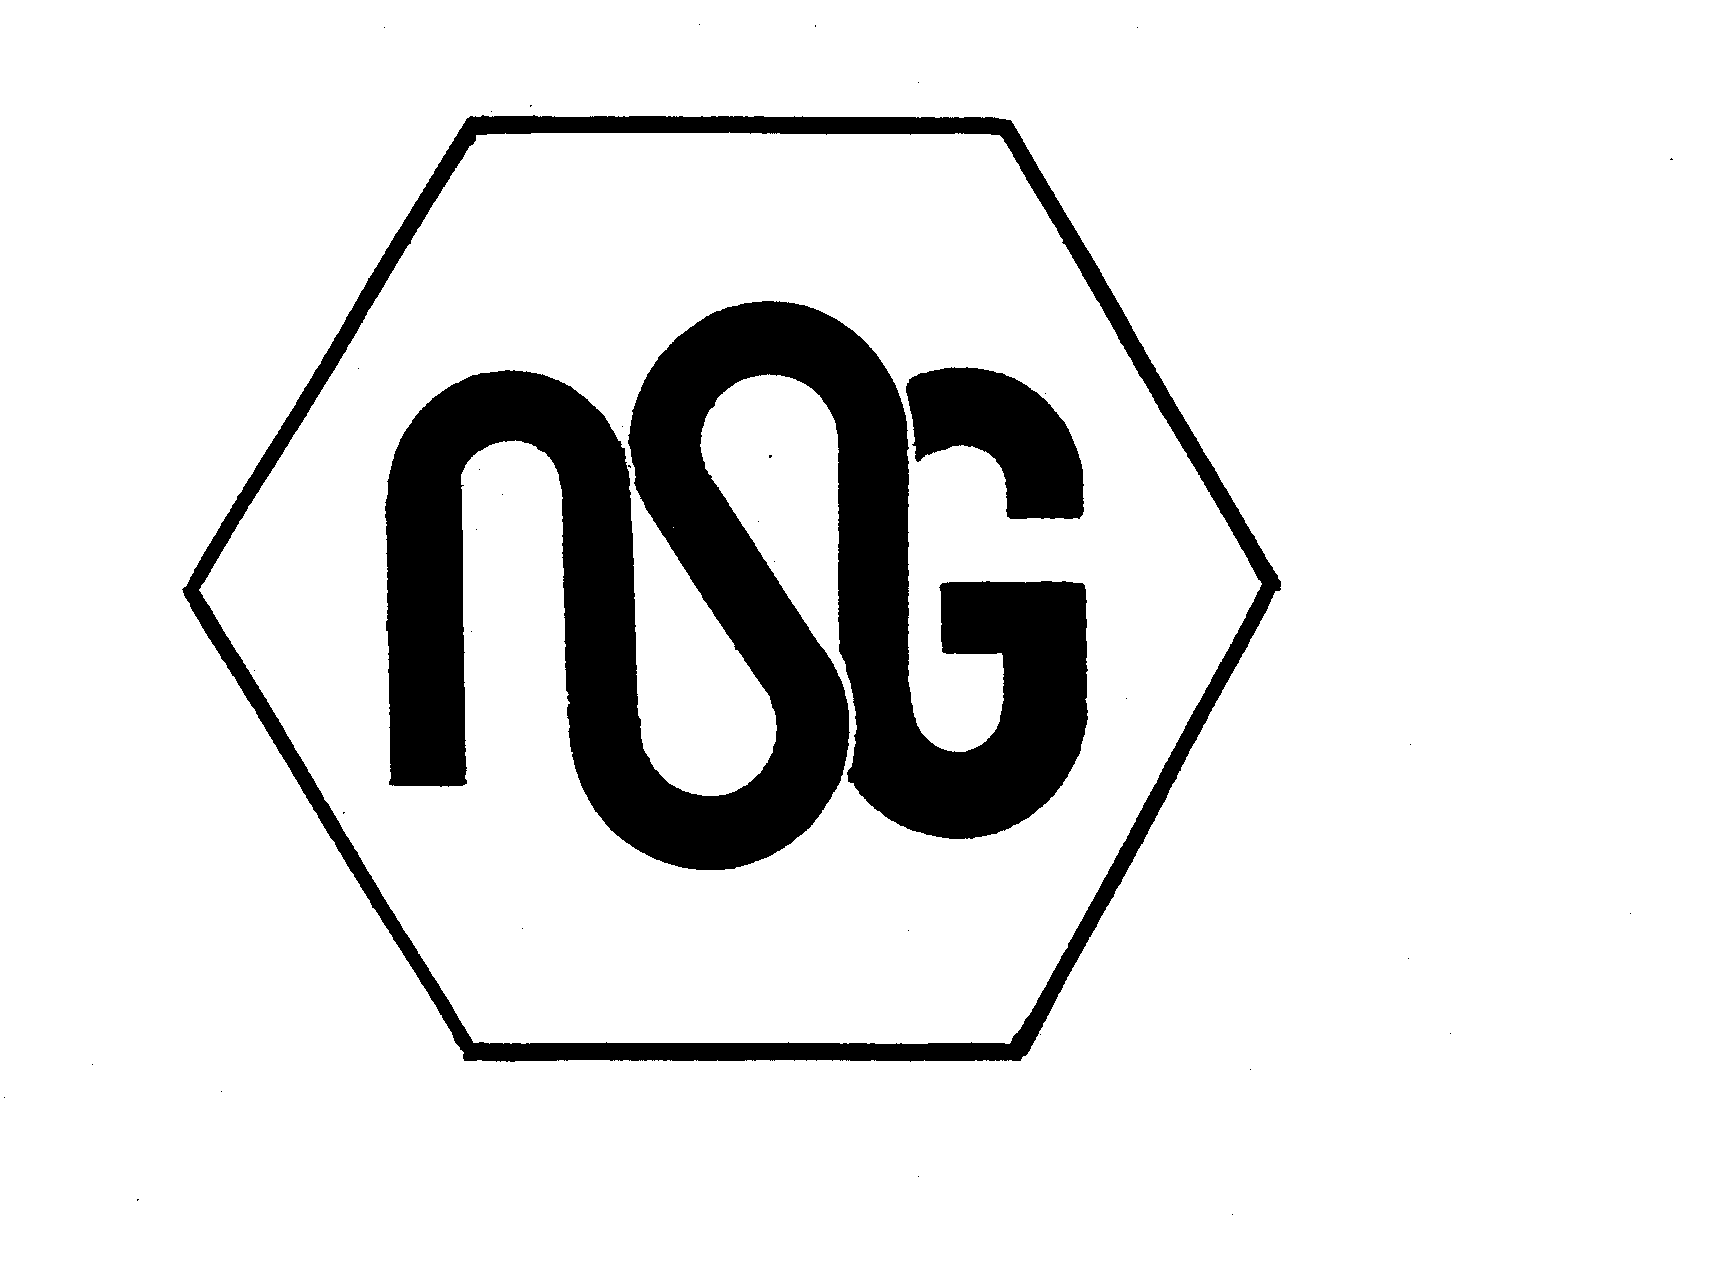 NSG